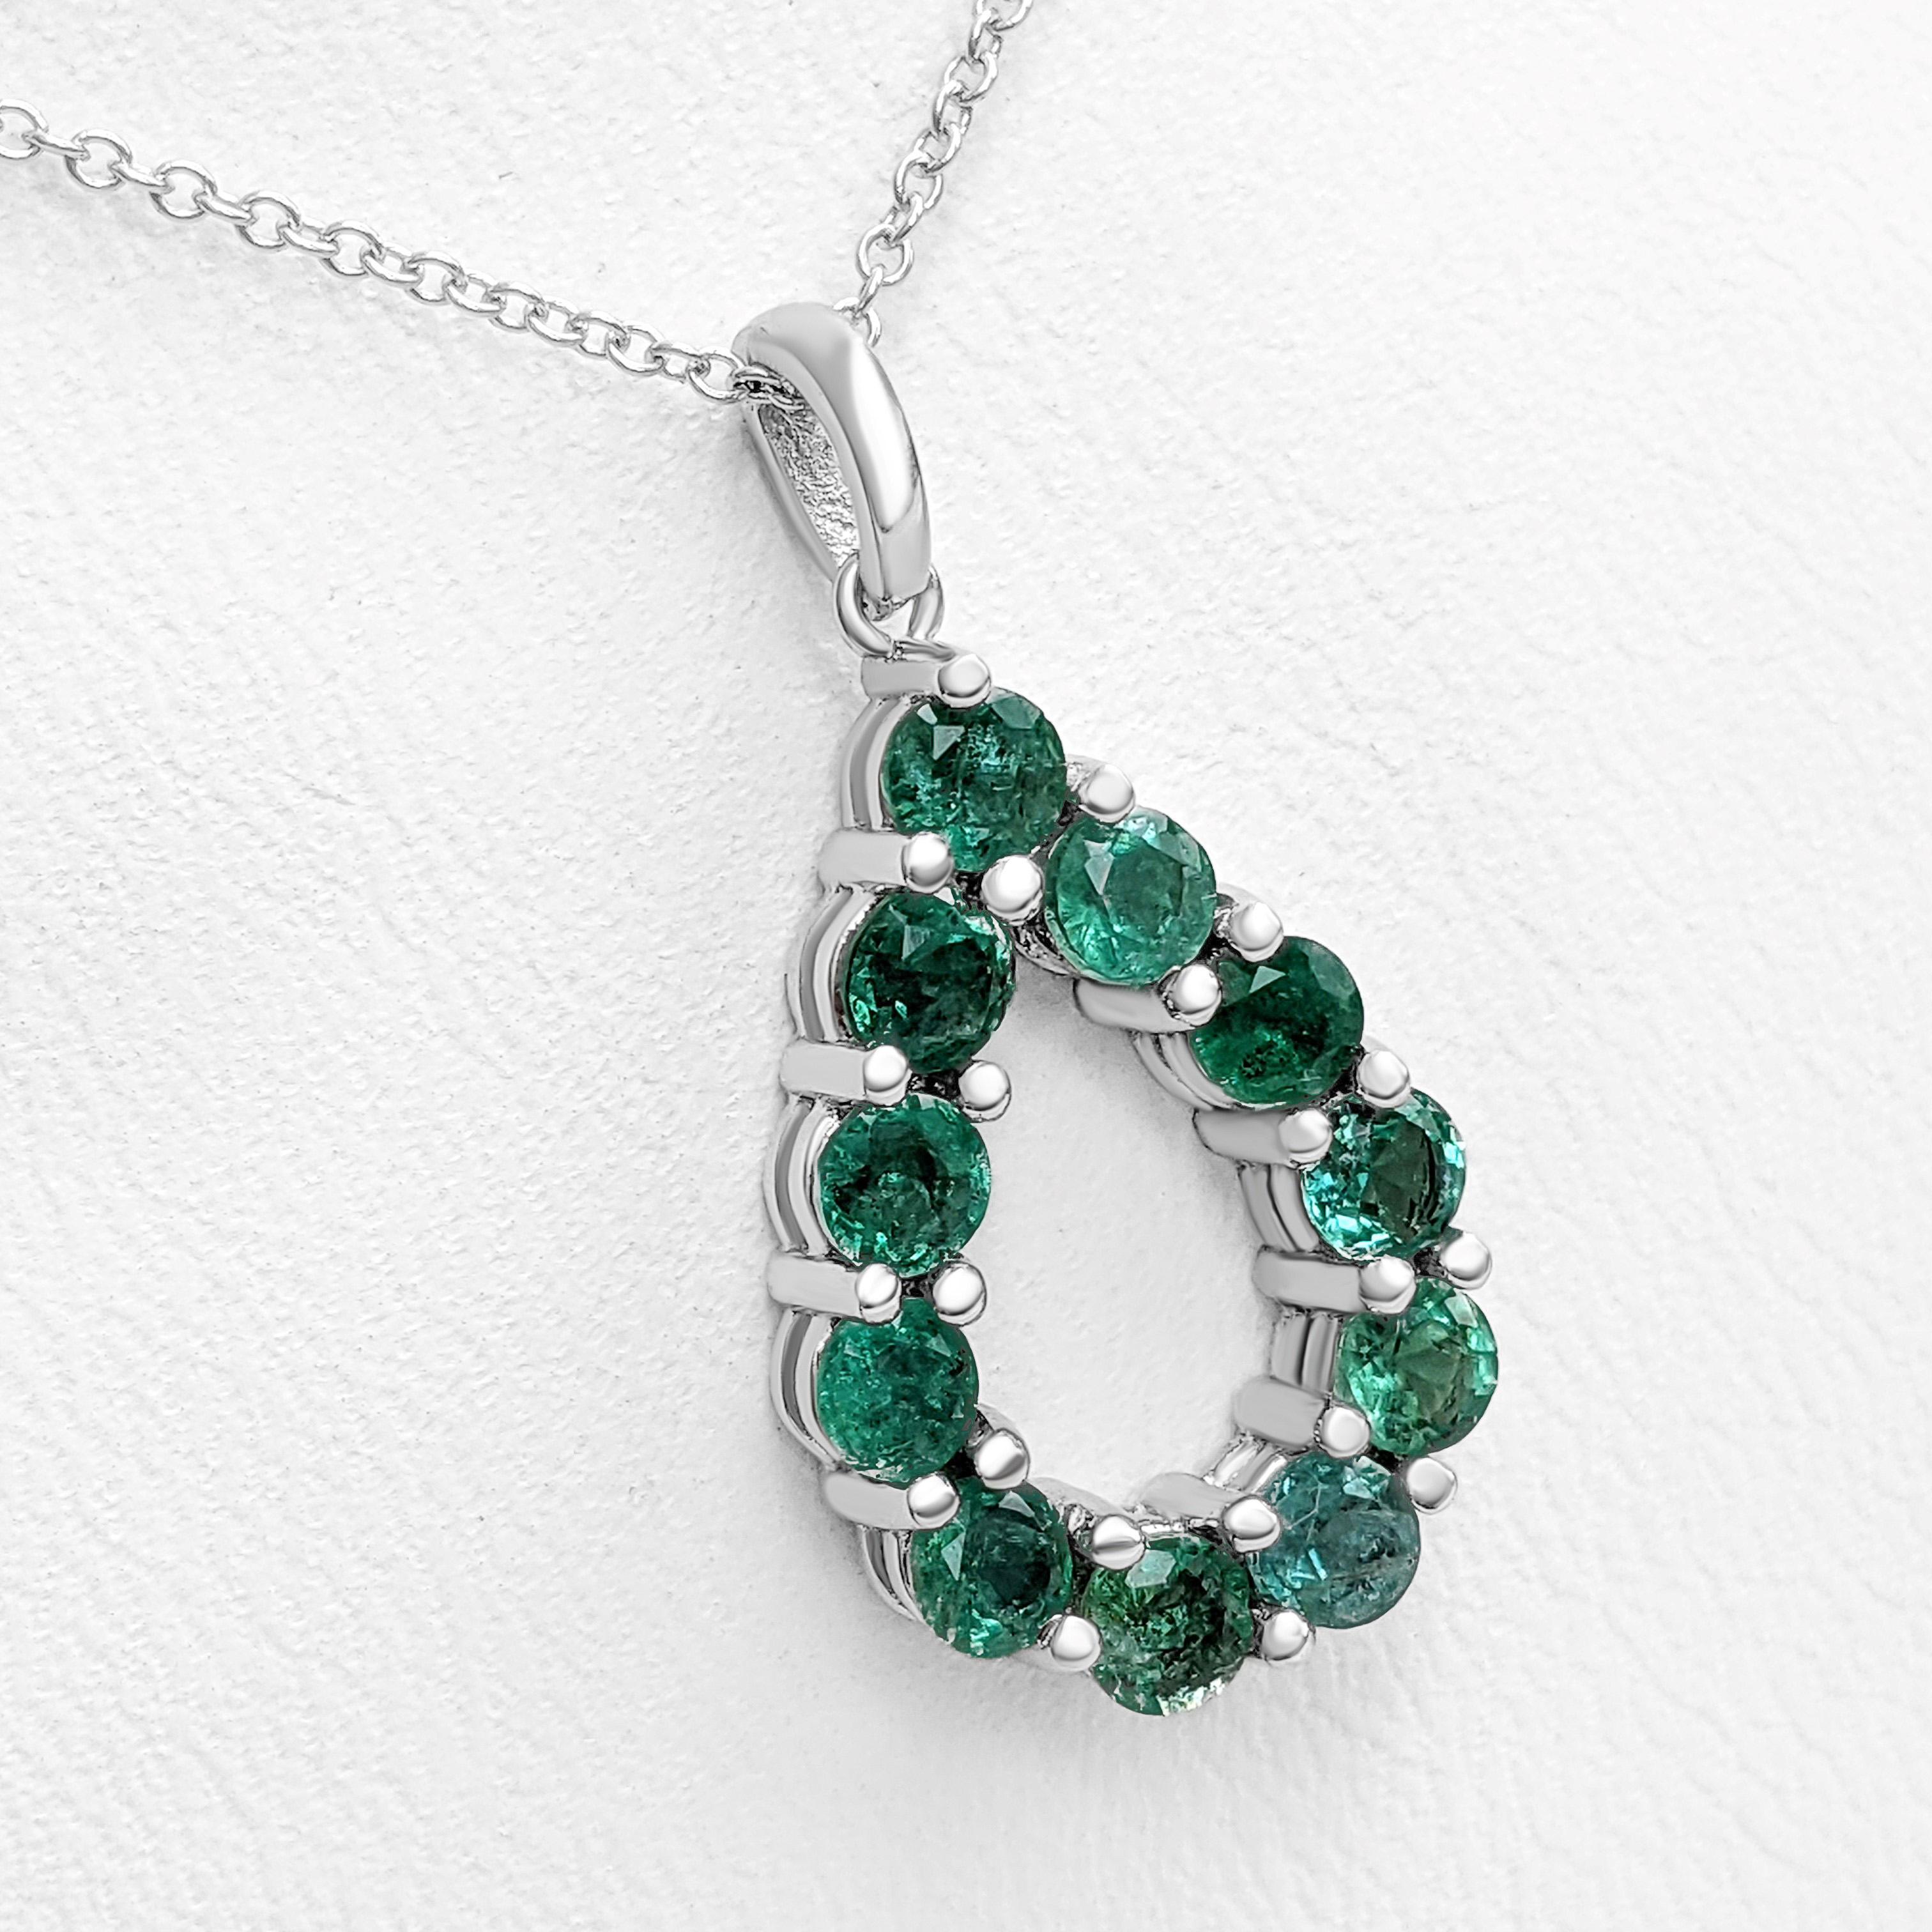 Round Cut NO RESERVE! 1.61 Carat Emerald, 14 Karat White Gold, Necklace with Pendant